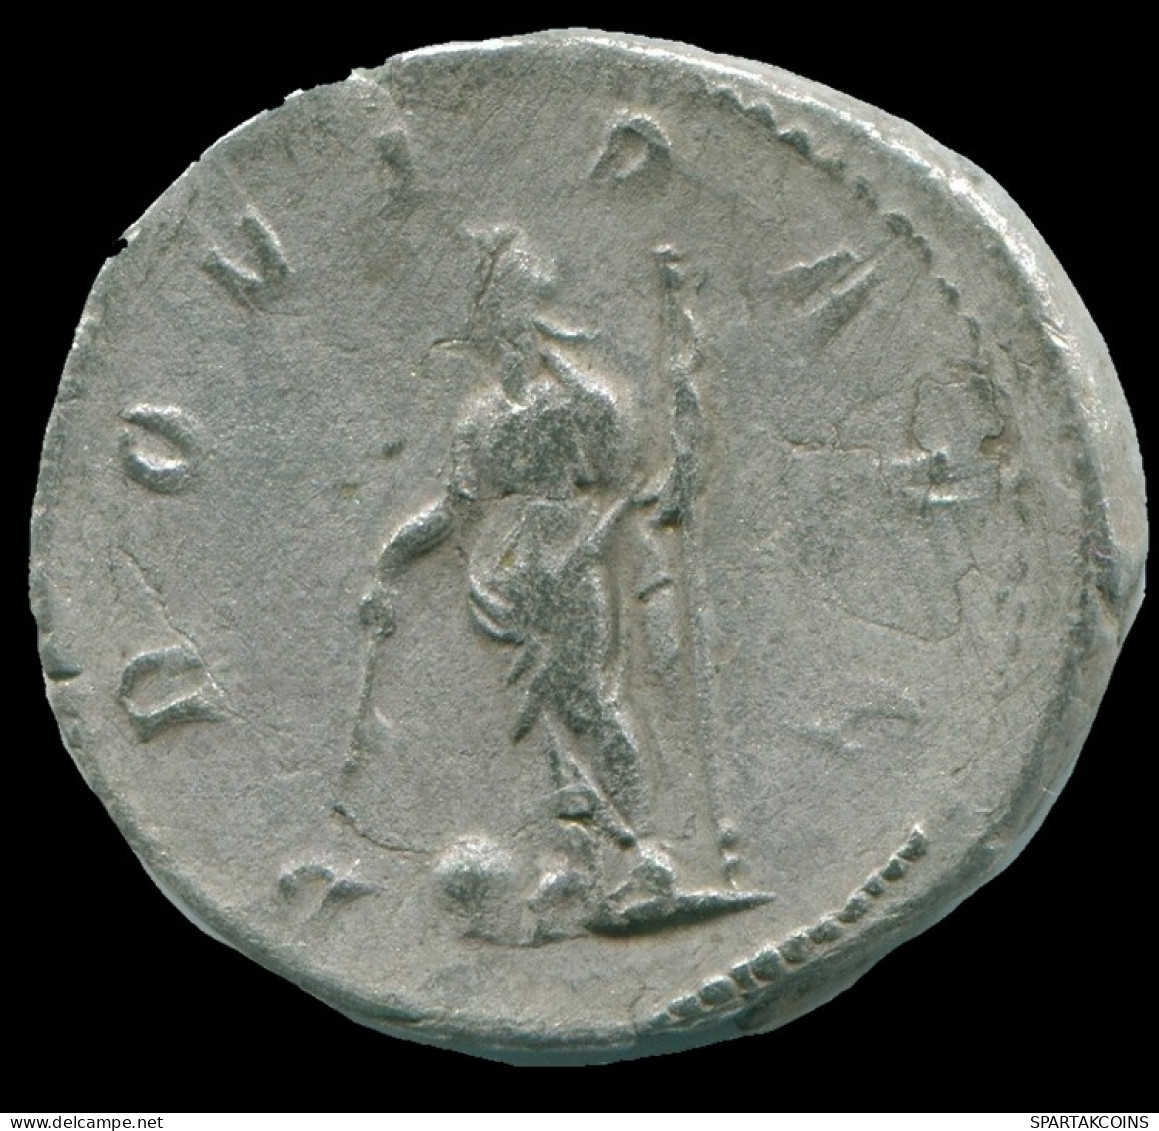 GORDIAN III AR ANTONINIANUS ROME AD 244 4TH OFFICINA PROVID AVG #ANC13120.43.D.A - La Crisis Militar (235 / 284)